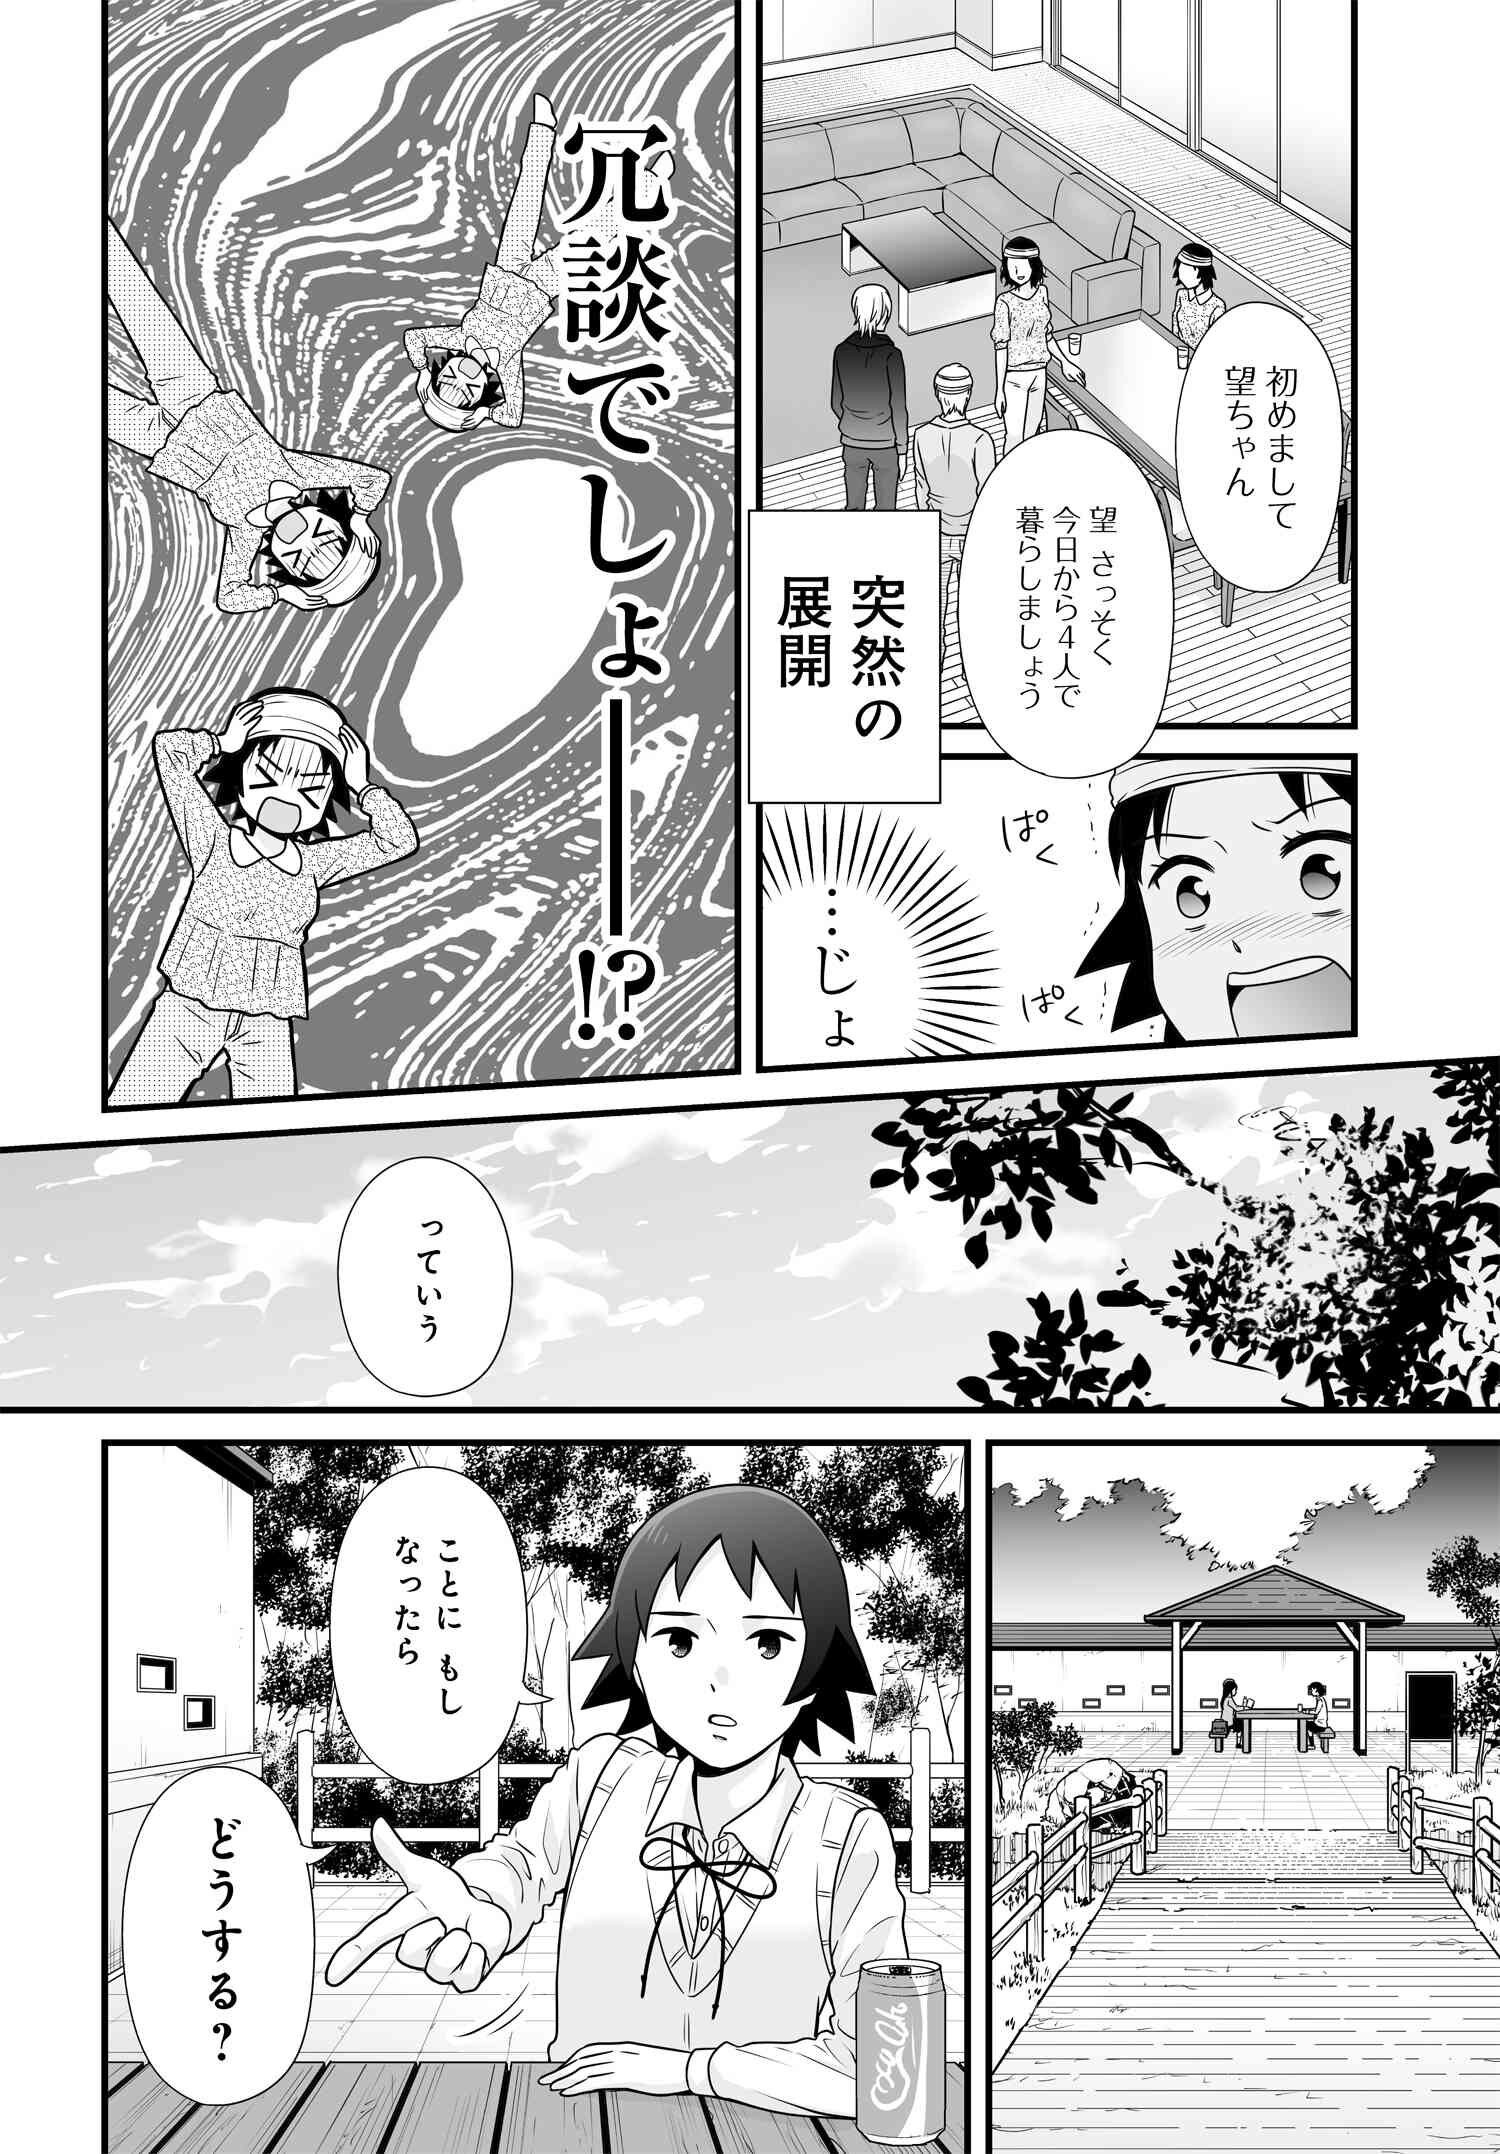 Joshikousei no Mudazukai - Chapter 097 - Page 3